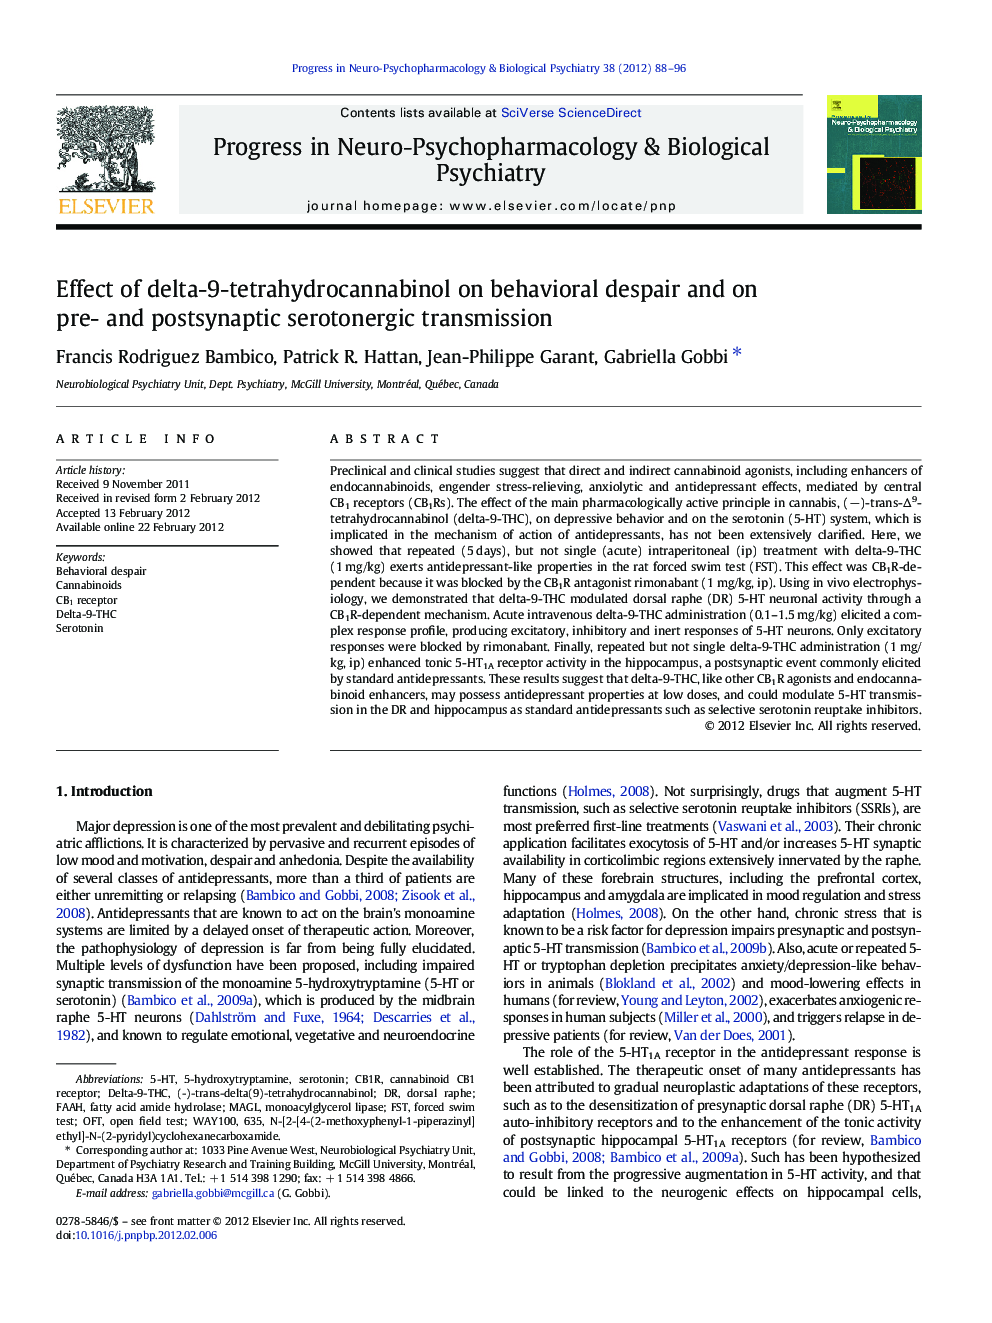 Effect of delta-9-tetrahydrocannabinol on behavioral despair and on pre- and postsynaptic serotonergic transmission